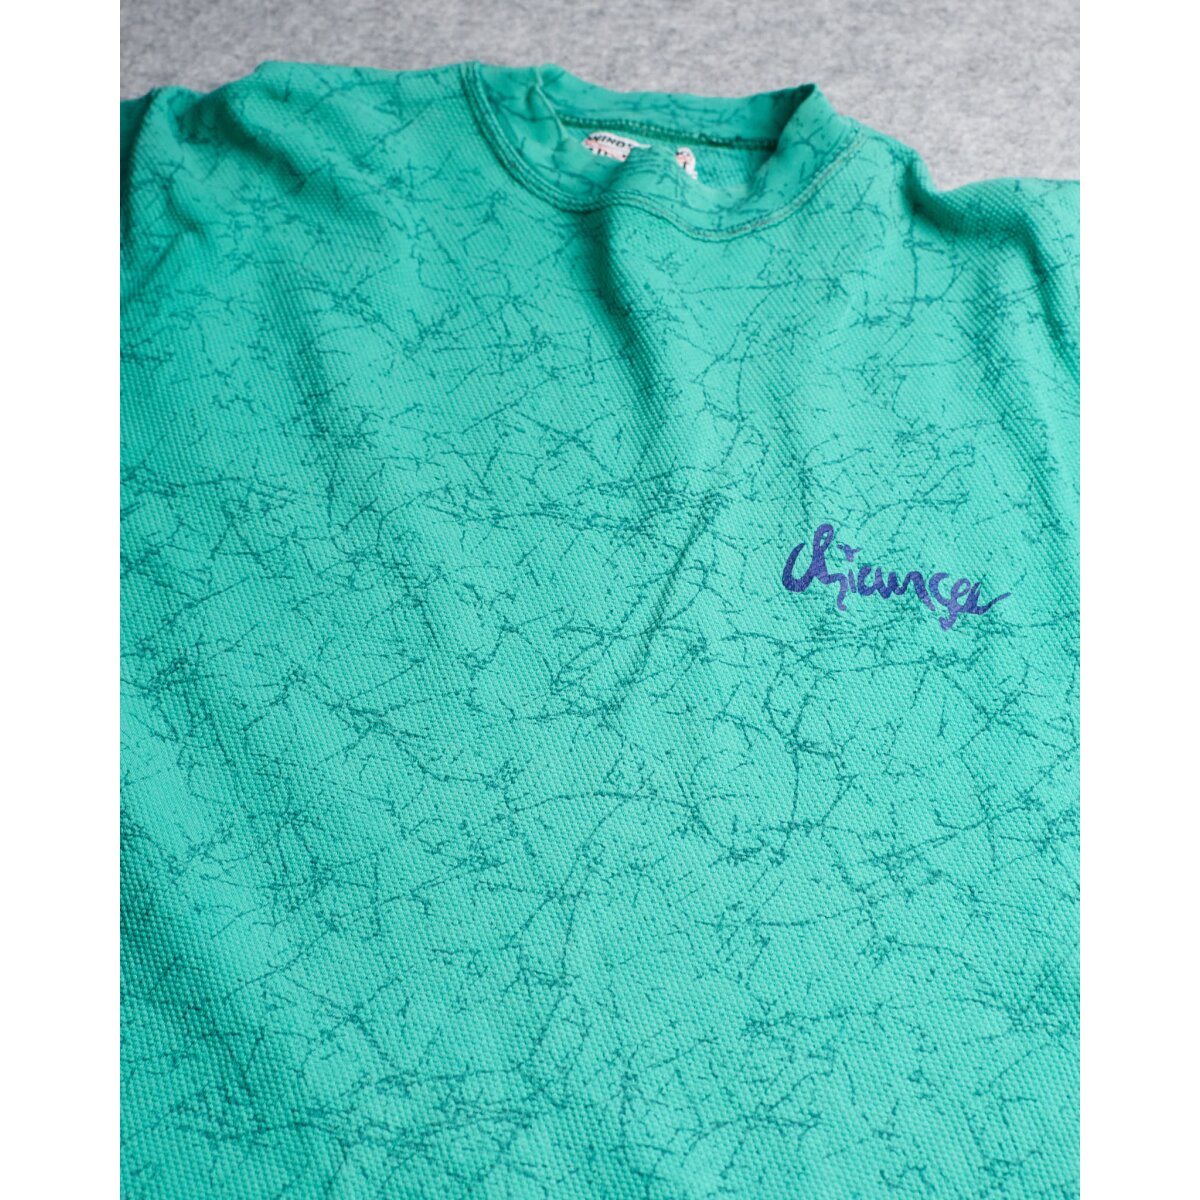 (M/L), Vintage Chiemsee T-Shirt 39,00 €